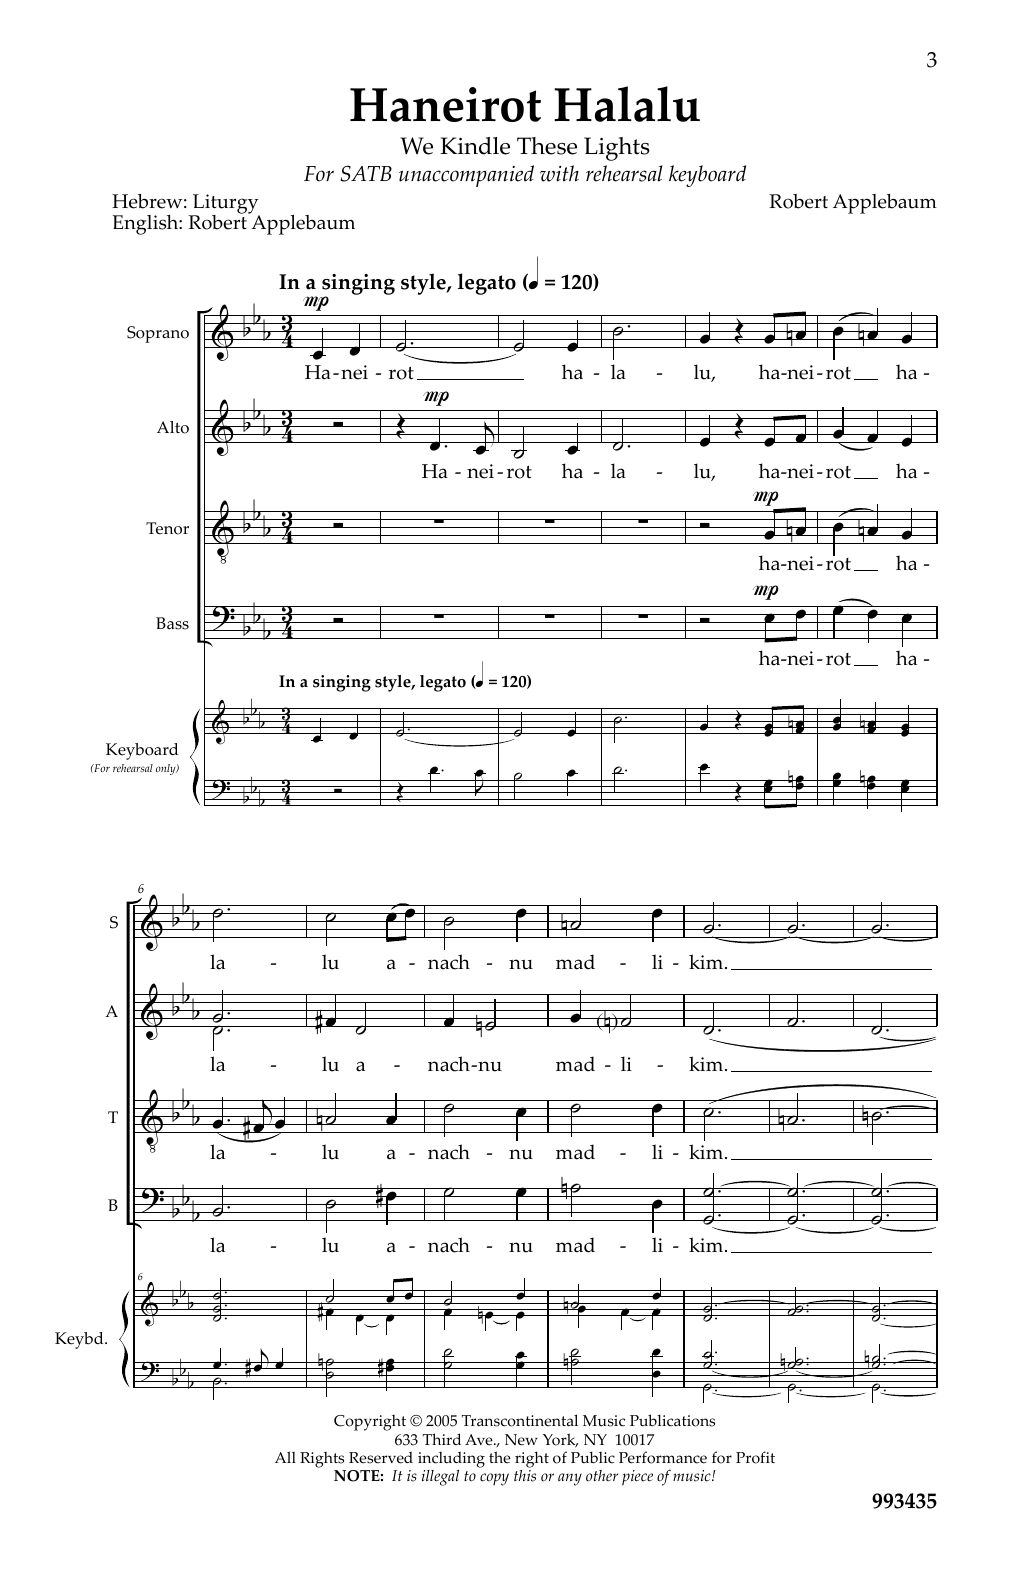 Robert Applebaum Haneirot Halalu (We Kindle These Lights) sheet music notes and chords arranged for SATB Choir